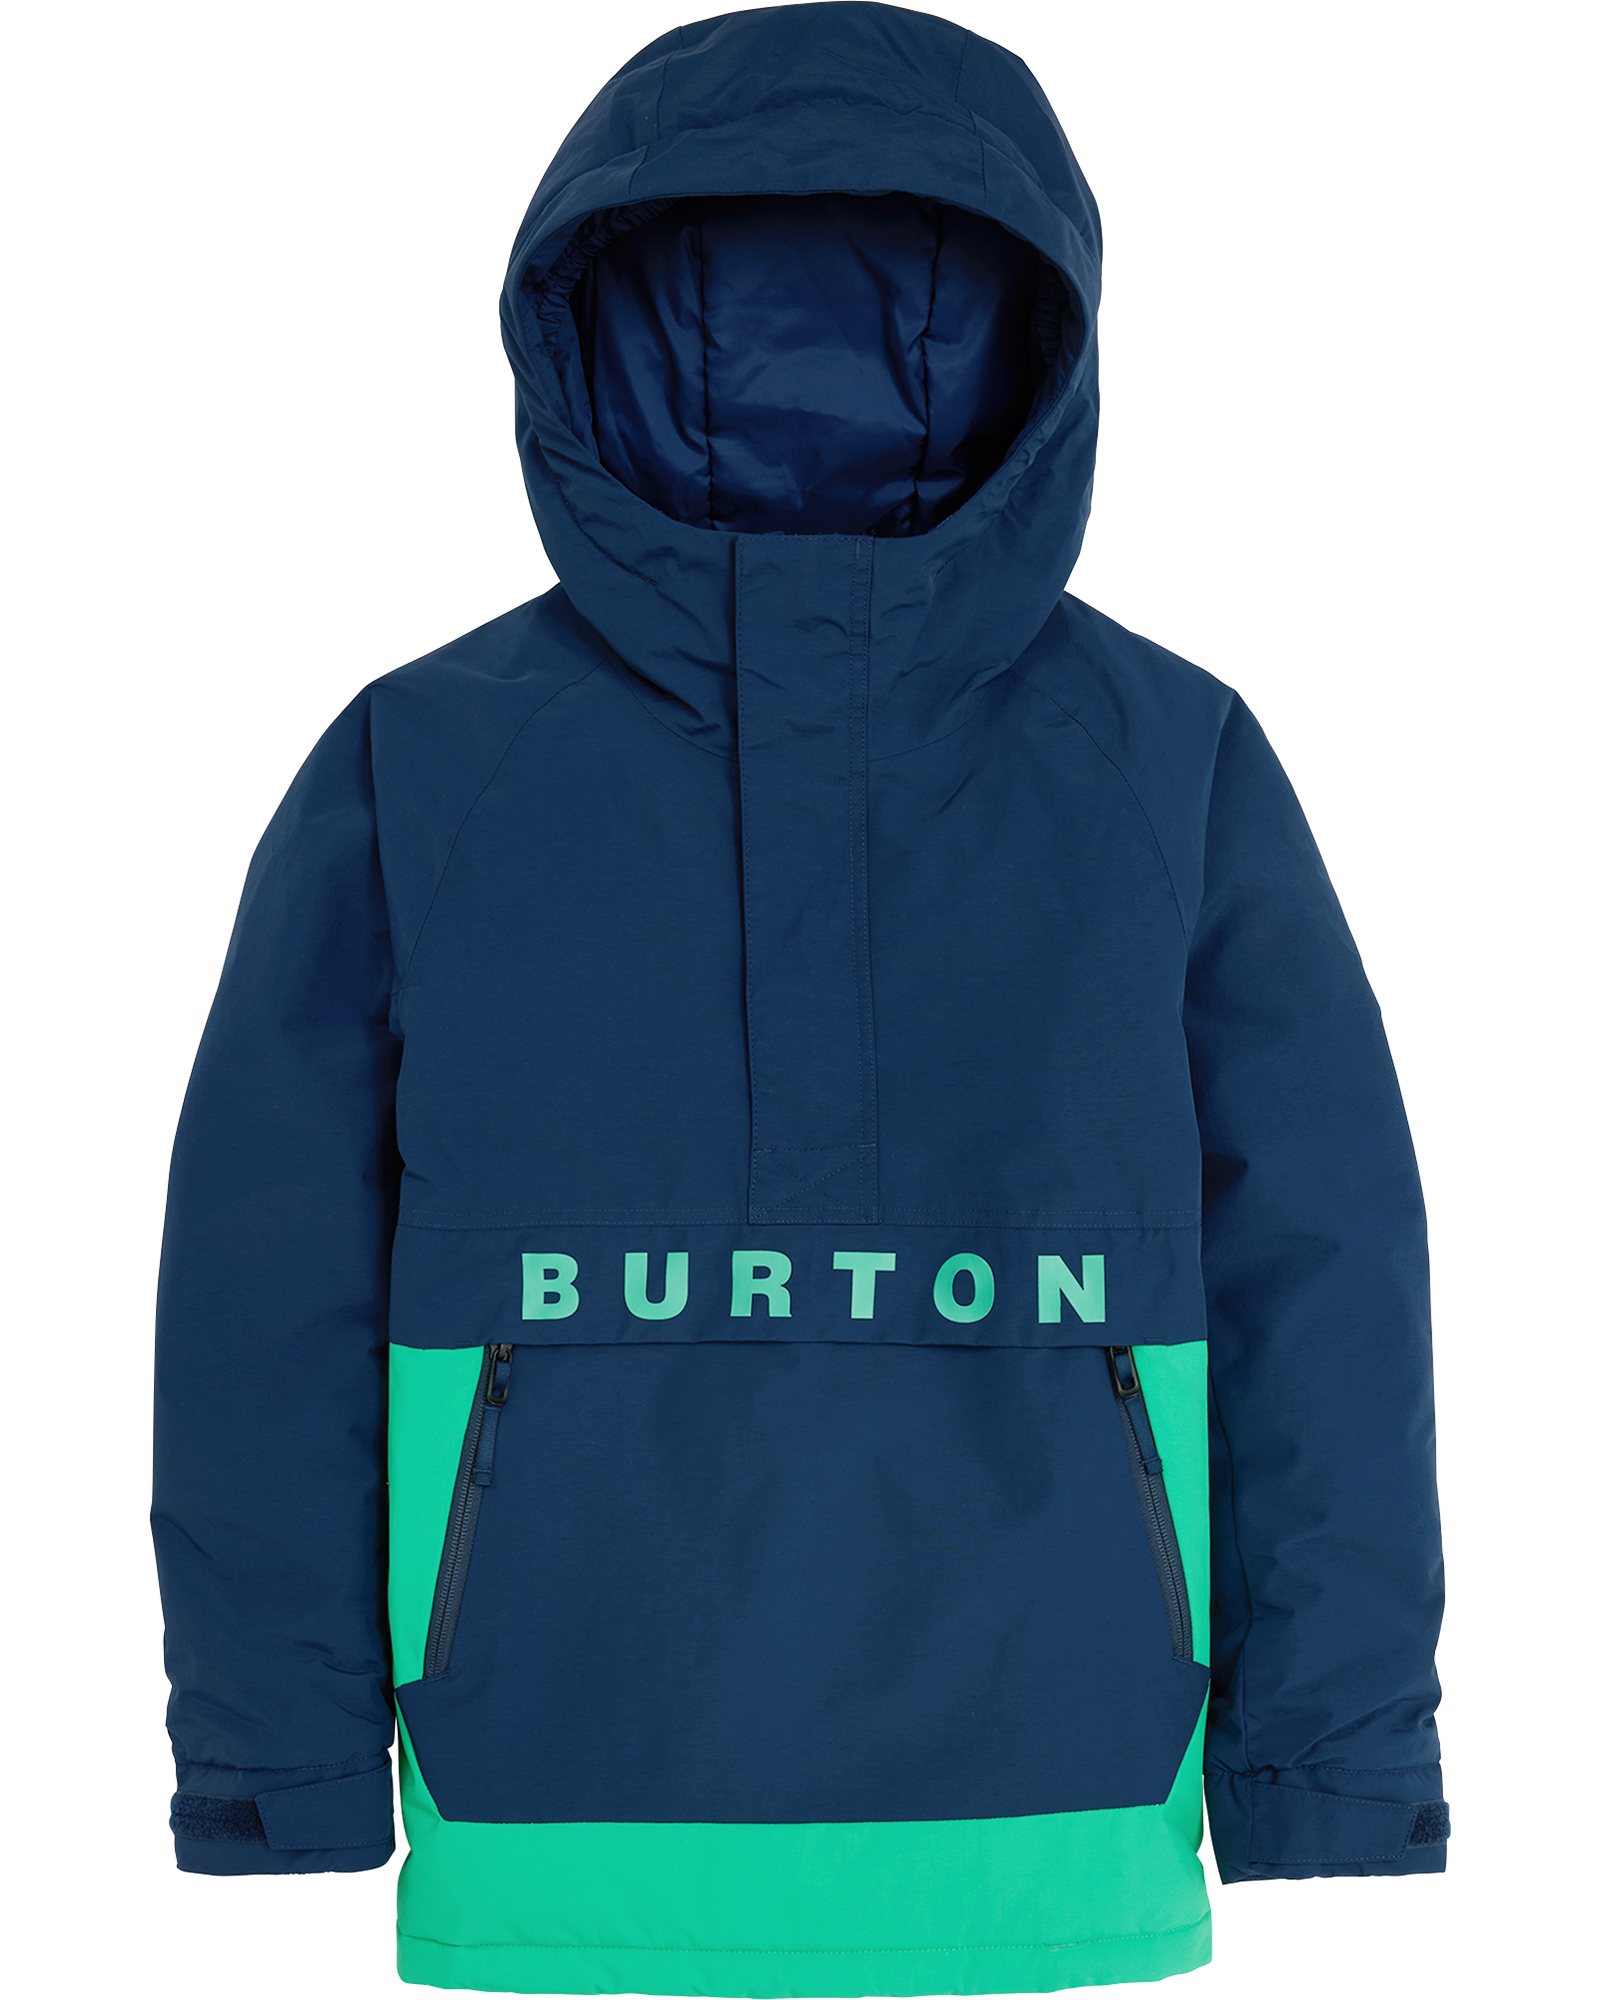 Burton Frostner 2L Xlg Kids’ Jacket - Dress Blue/Galaxy Green XL